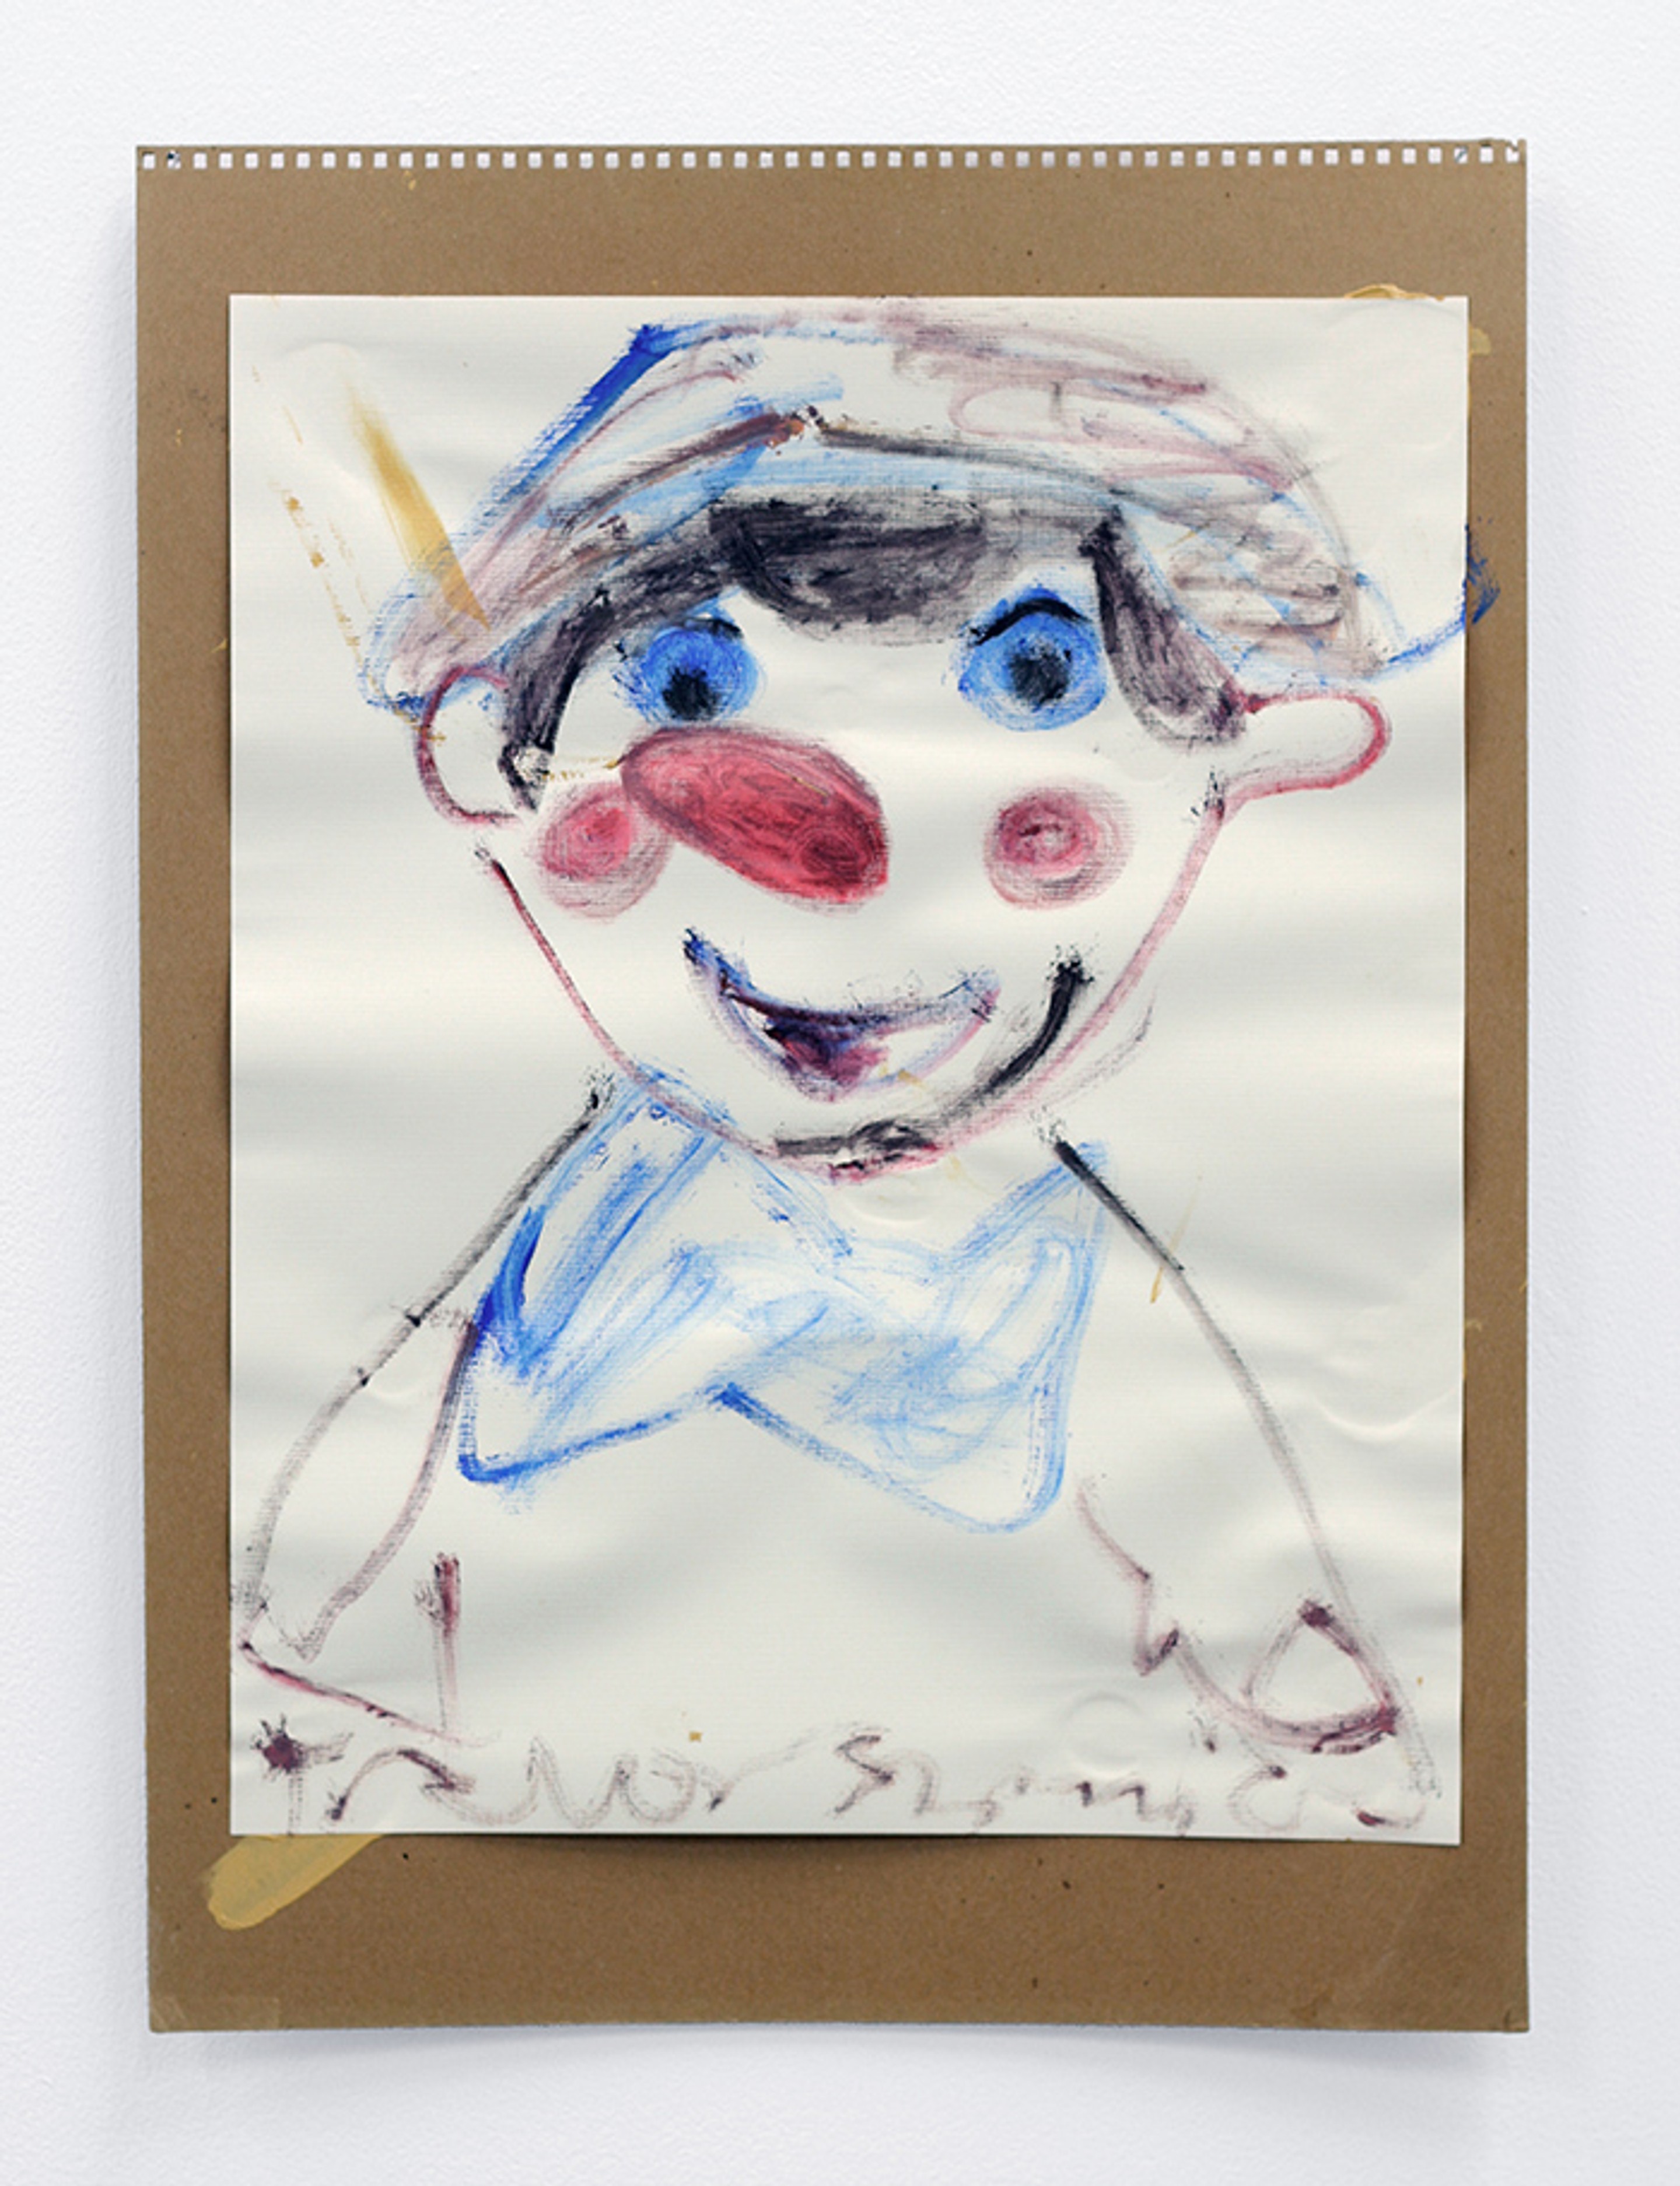 Trevor Shimizu, Pinocchio (2015). Oil on canvas paper on cardboard